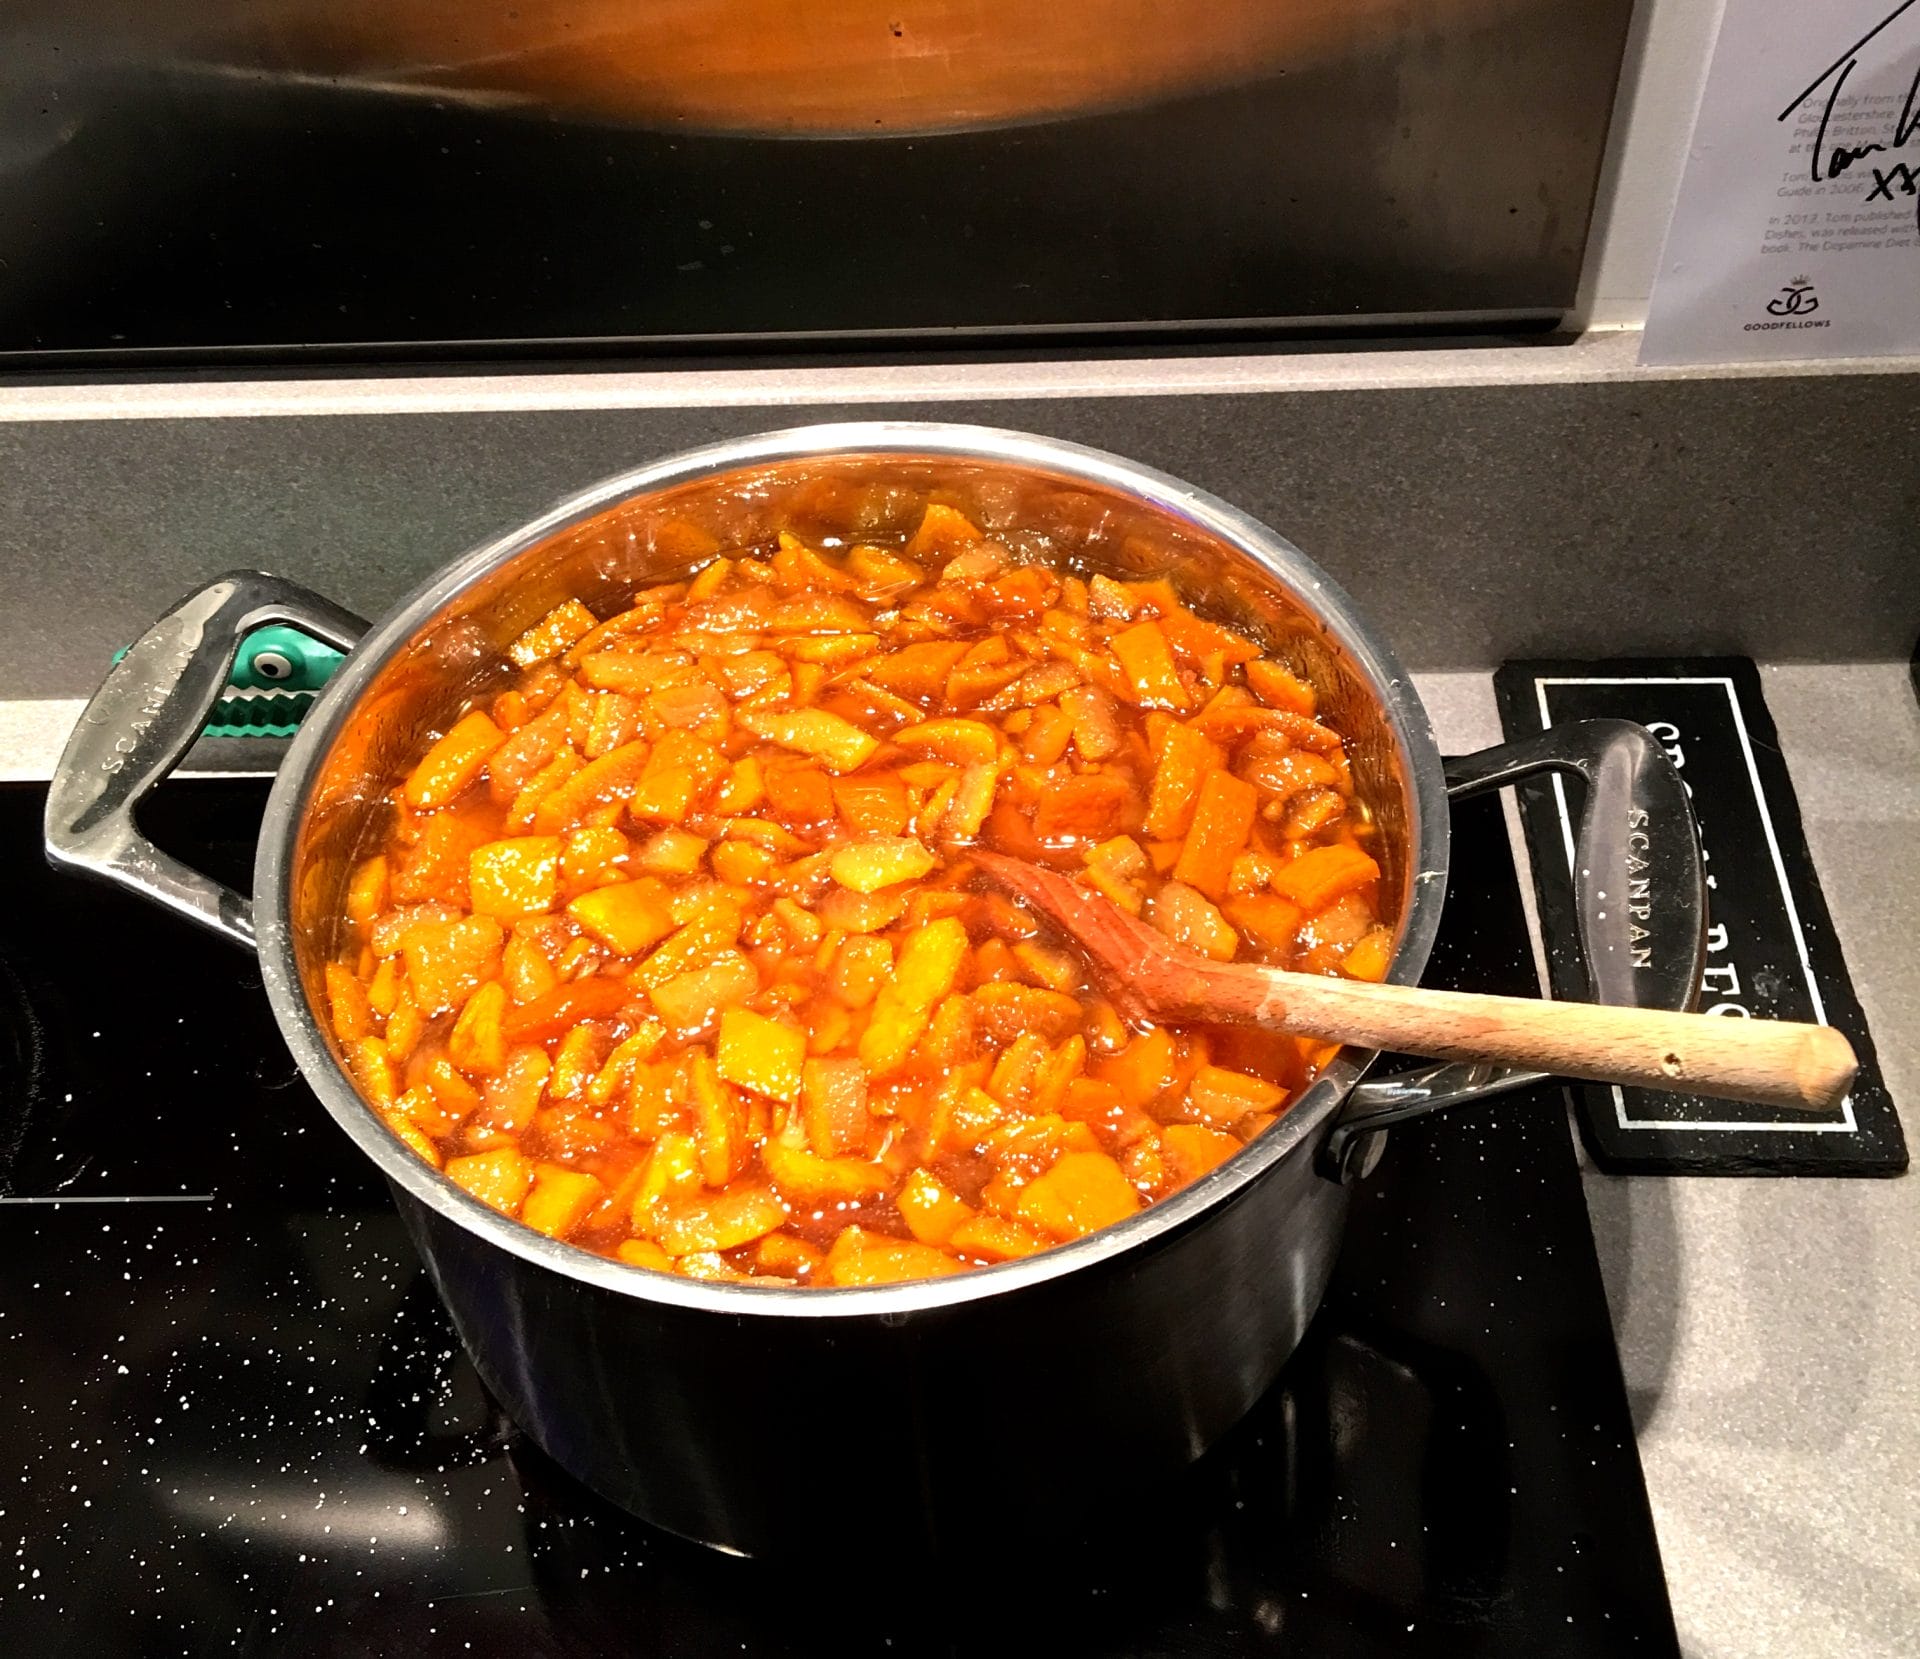 Boiling oranges